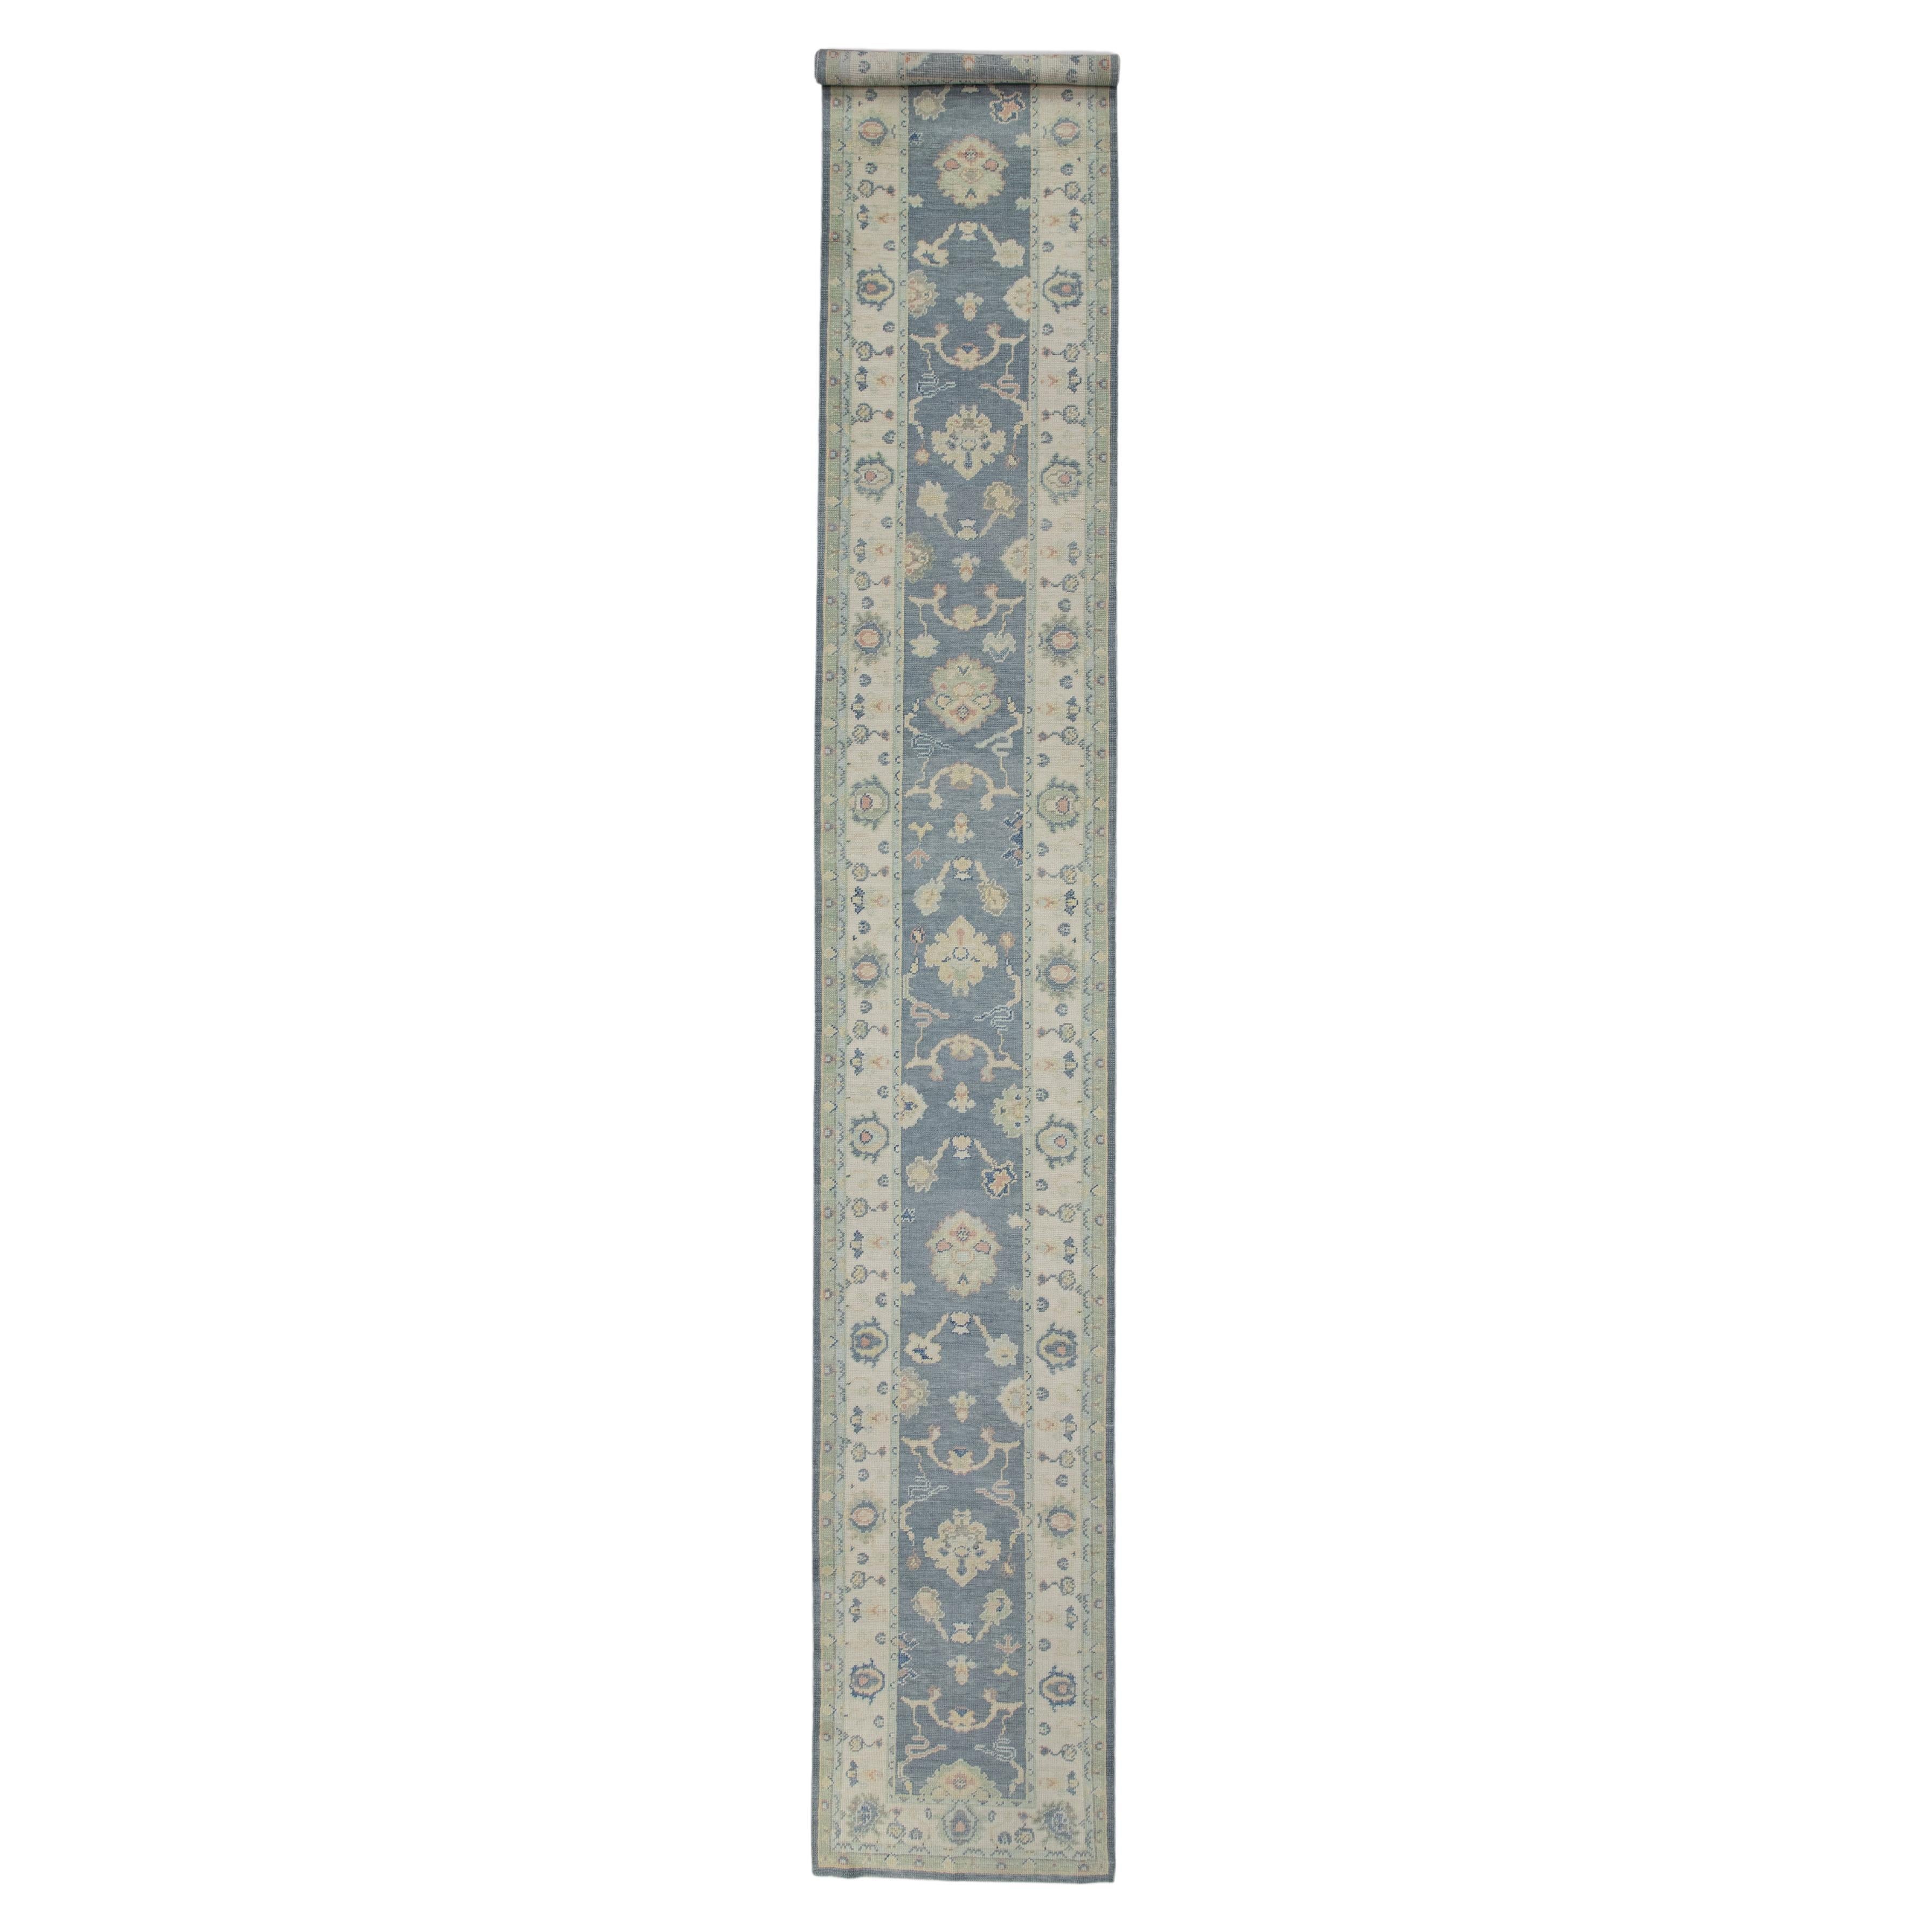 Blue Floral Design Handwoven Wool Turkish Oushak Runner 2'10" X 18'6" For Sale